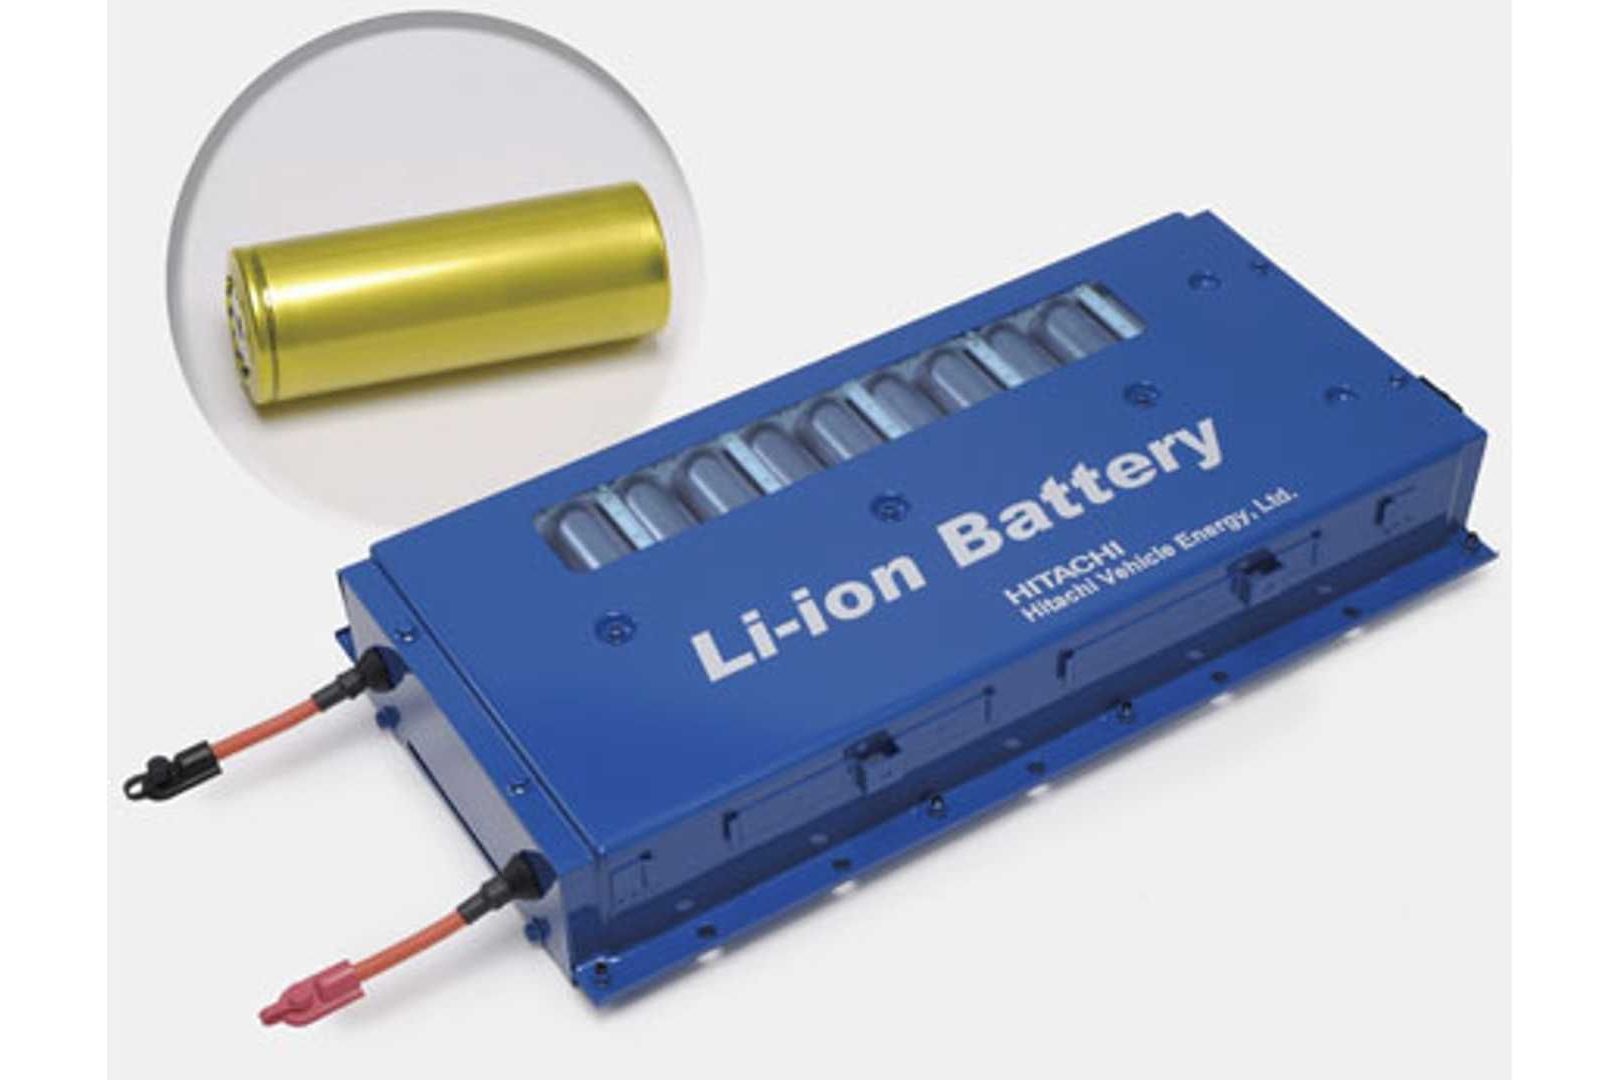 Литий ионный аккумулятор почему литий. Литий-ионные аккумуляторы (li-ion). Батареи аккумуляторные литий-ионные. Литий-ионный аккумулятор 18650. Батарея ионная литий на36в15амперкупить.